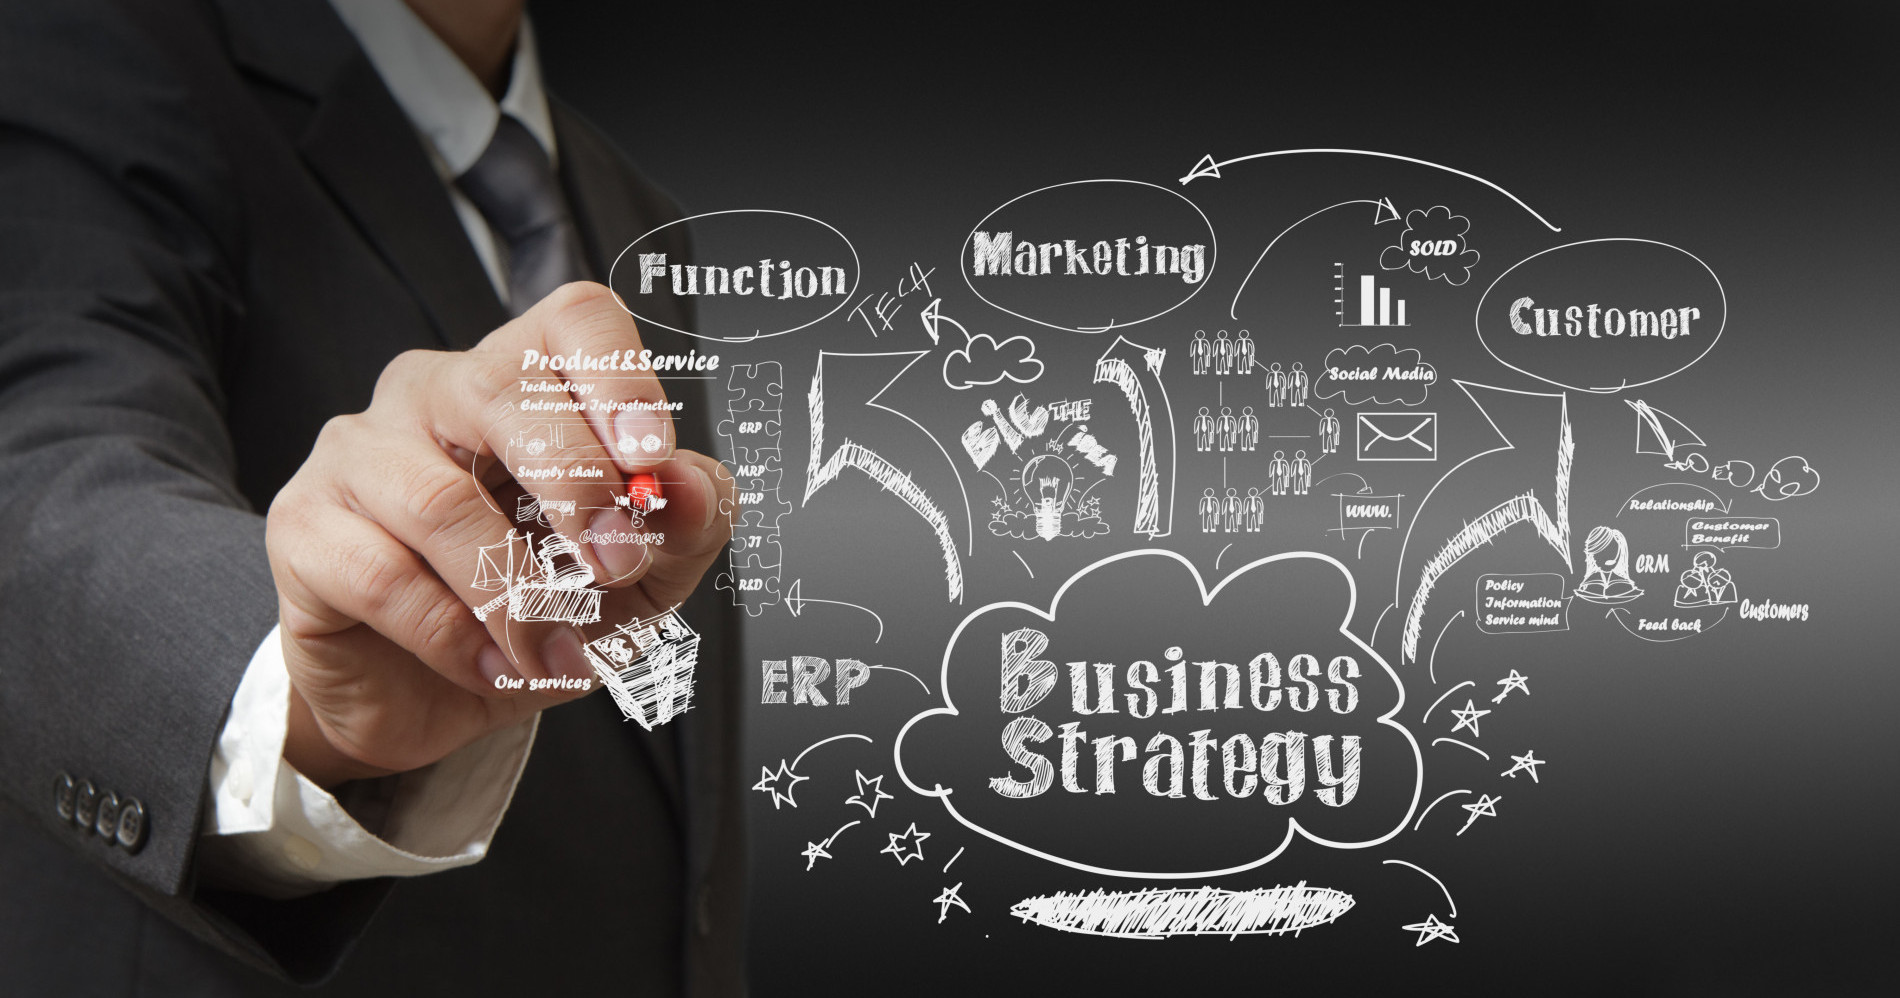 ilustrasi strategi bisnis pada usaha kalian (sumber gambar : storyblocks.com)